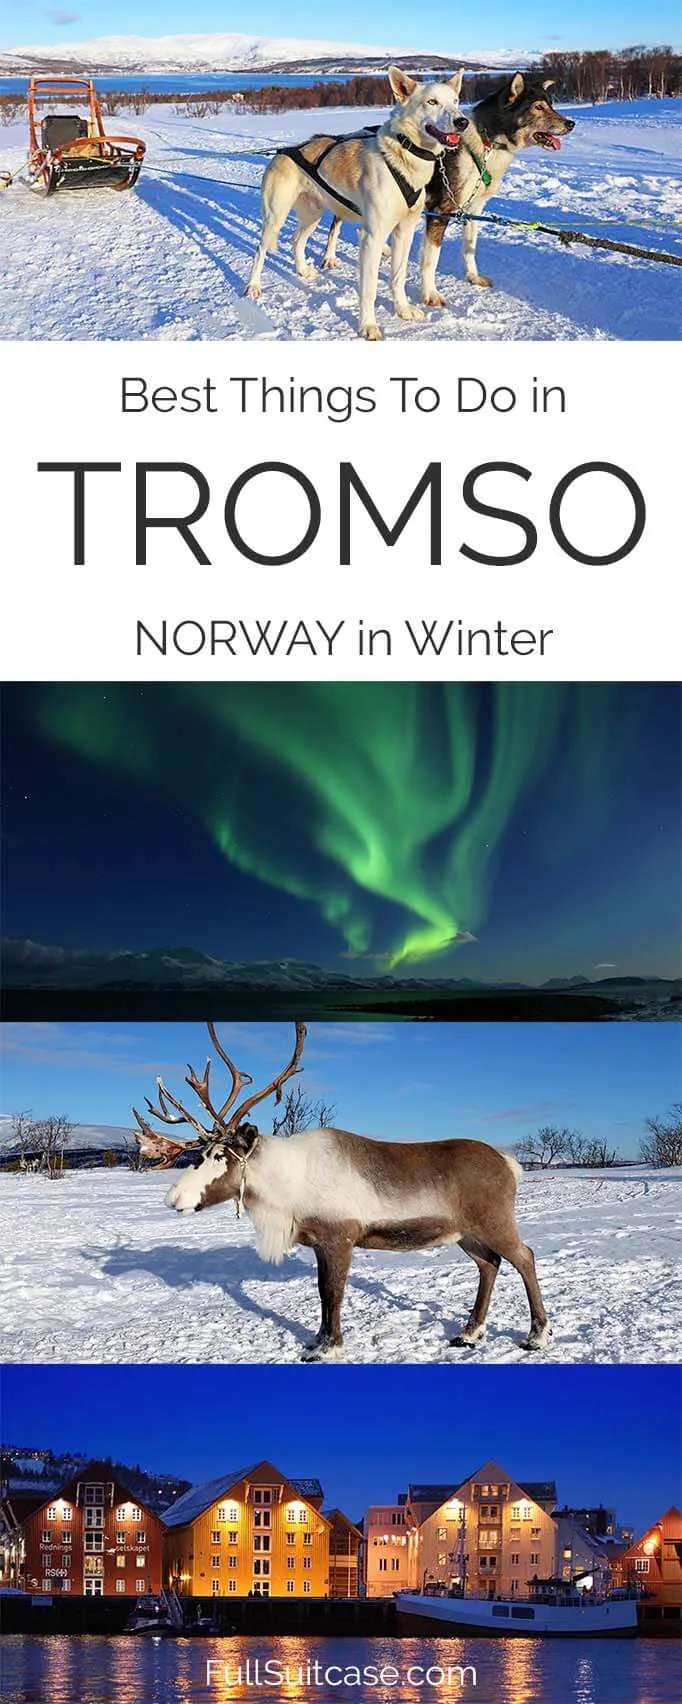 Best things to do in Tromso in winter - Arctic winter wonderland in Northern Norway